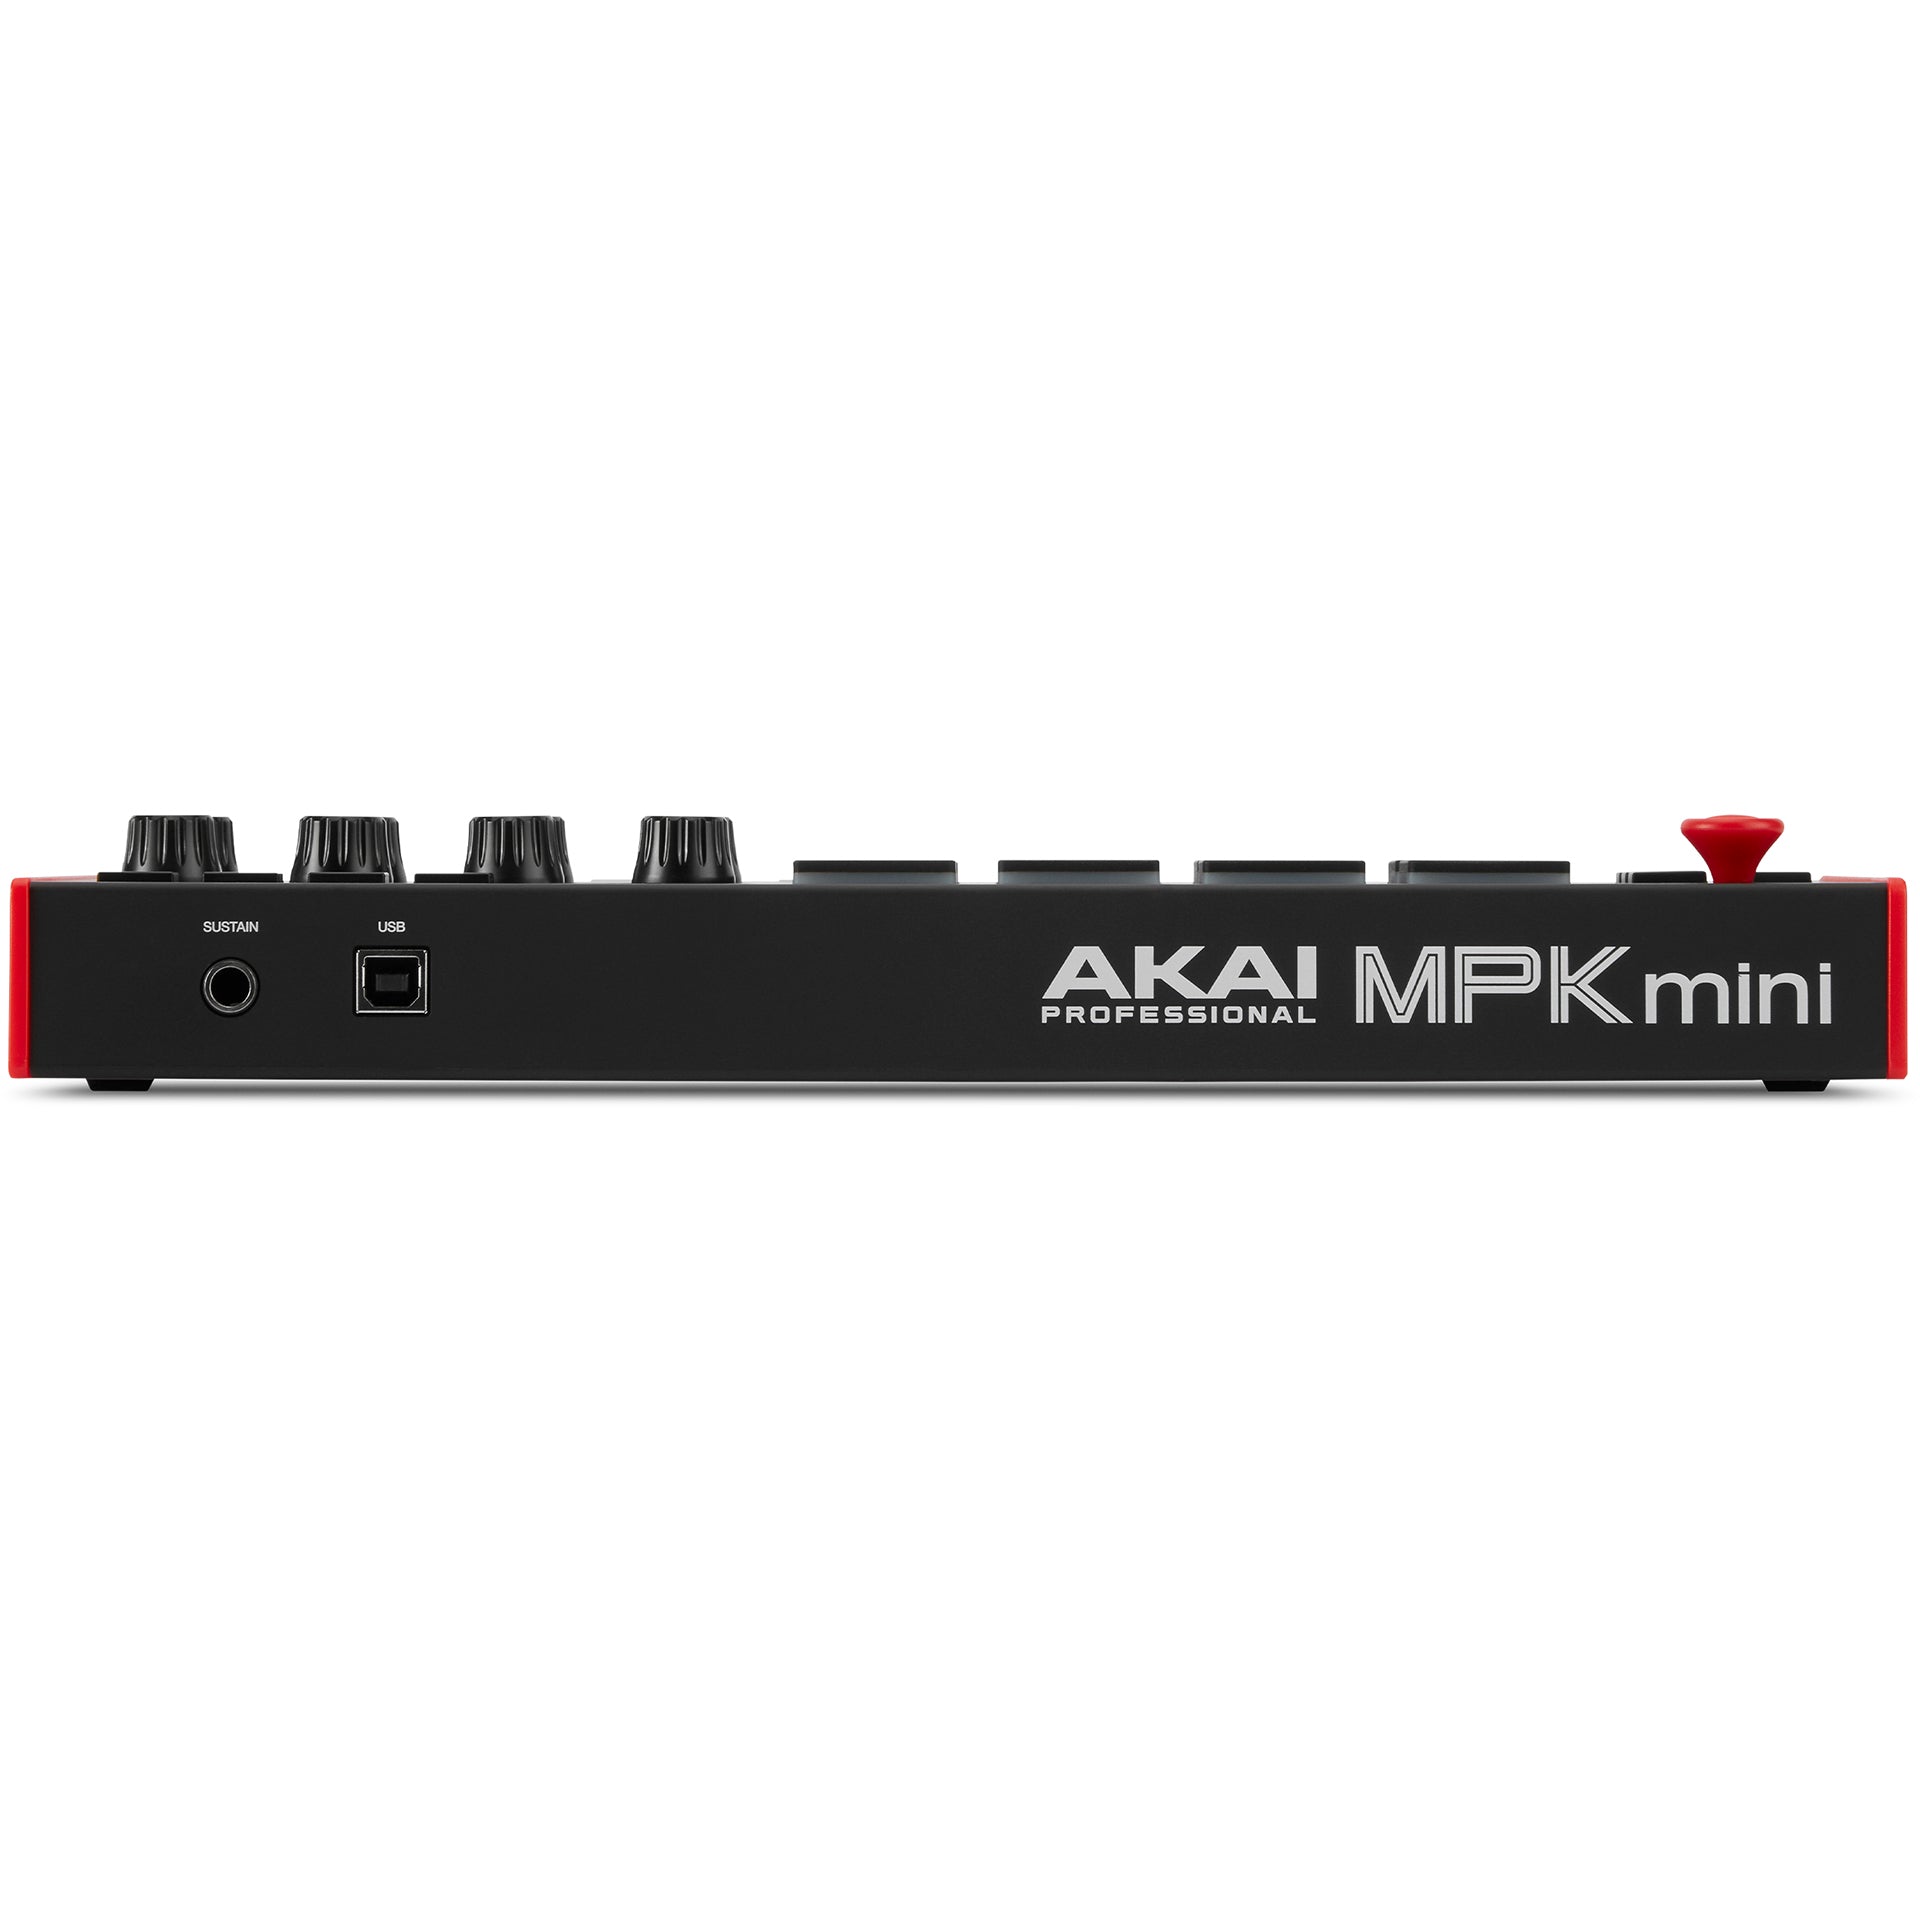 AKAI MPK mini MK3 Professional MIDI Keyboard Controller Black New in Box  JAPAN 694318024874